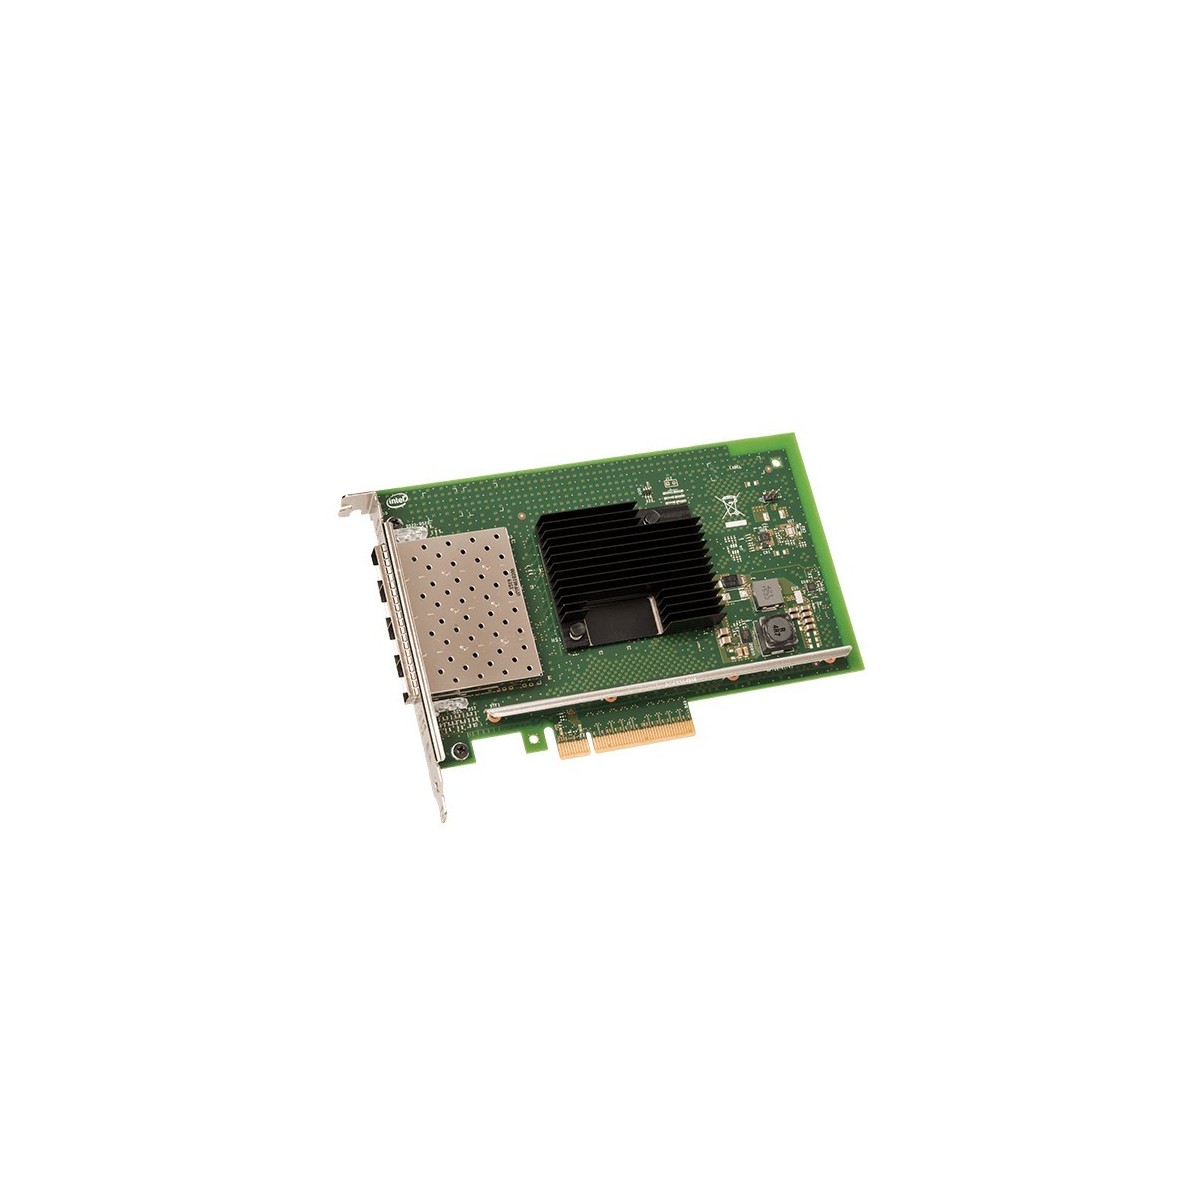 Intel Ethernet Converged Network Adapter X710-DA4, 10GbE/1GbE quad ports SFP+, PCI-E 3.0x8 (Full Height Card) bulk